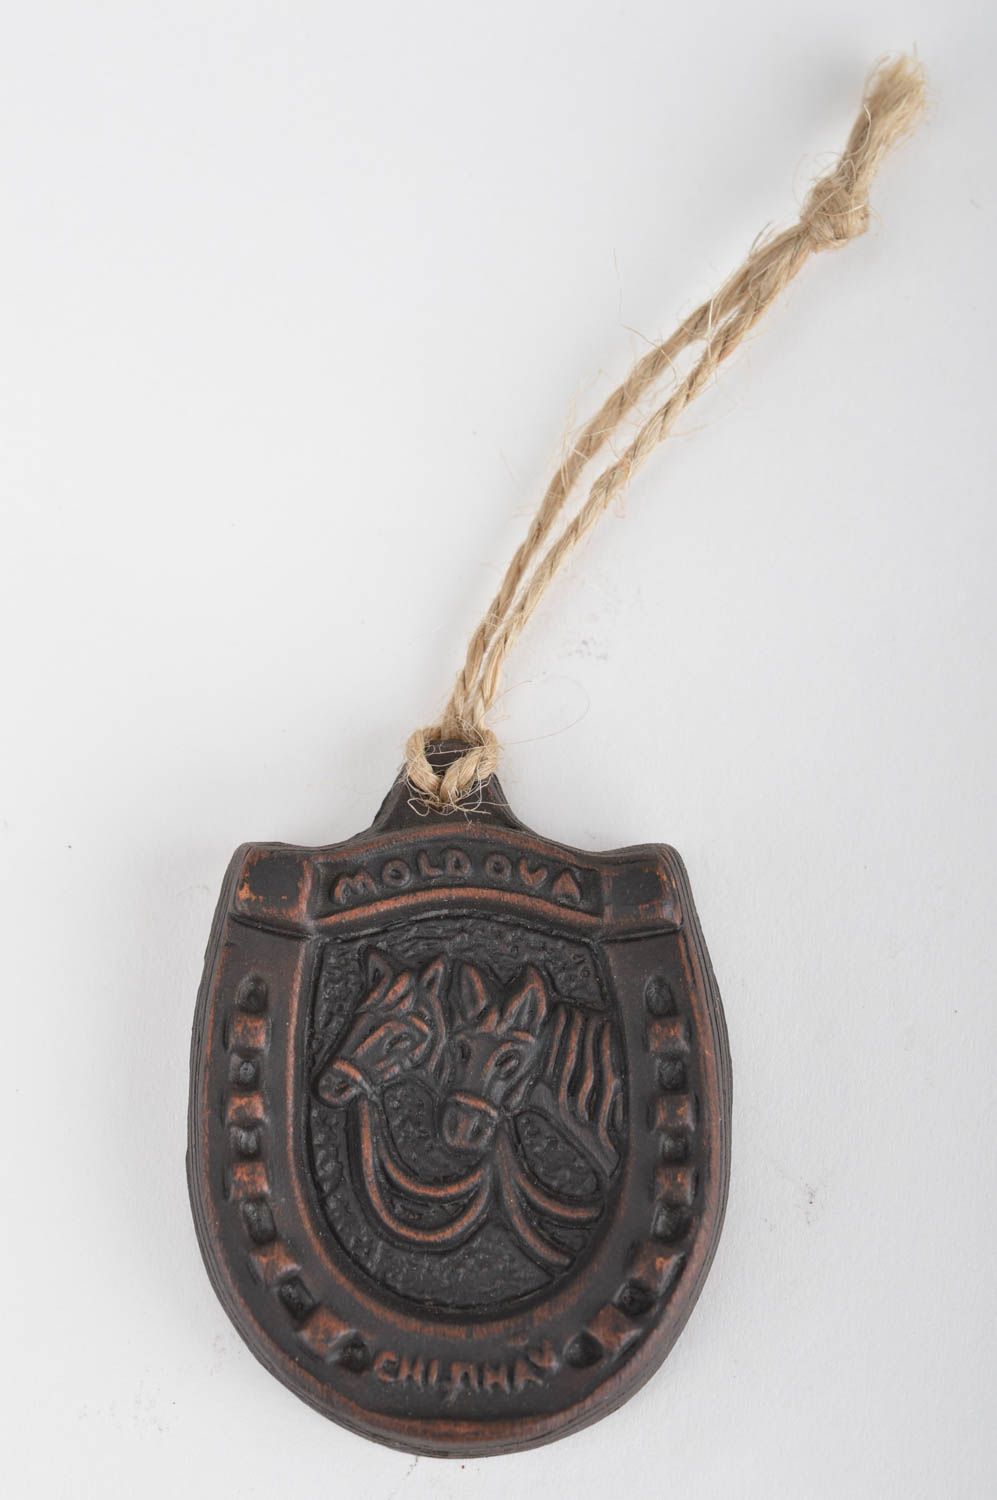 Handmade ceramic souvenir keychain in the shape of horseshoe kilned with milk photo 2